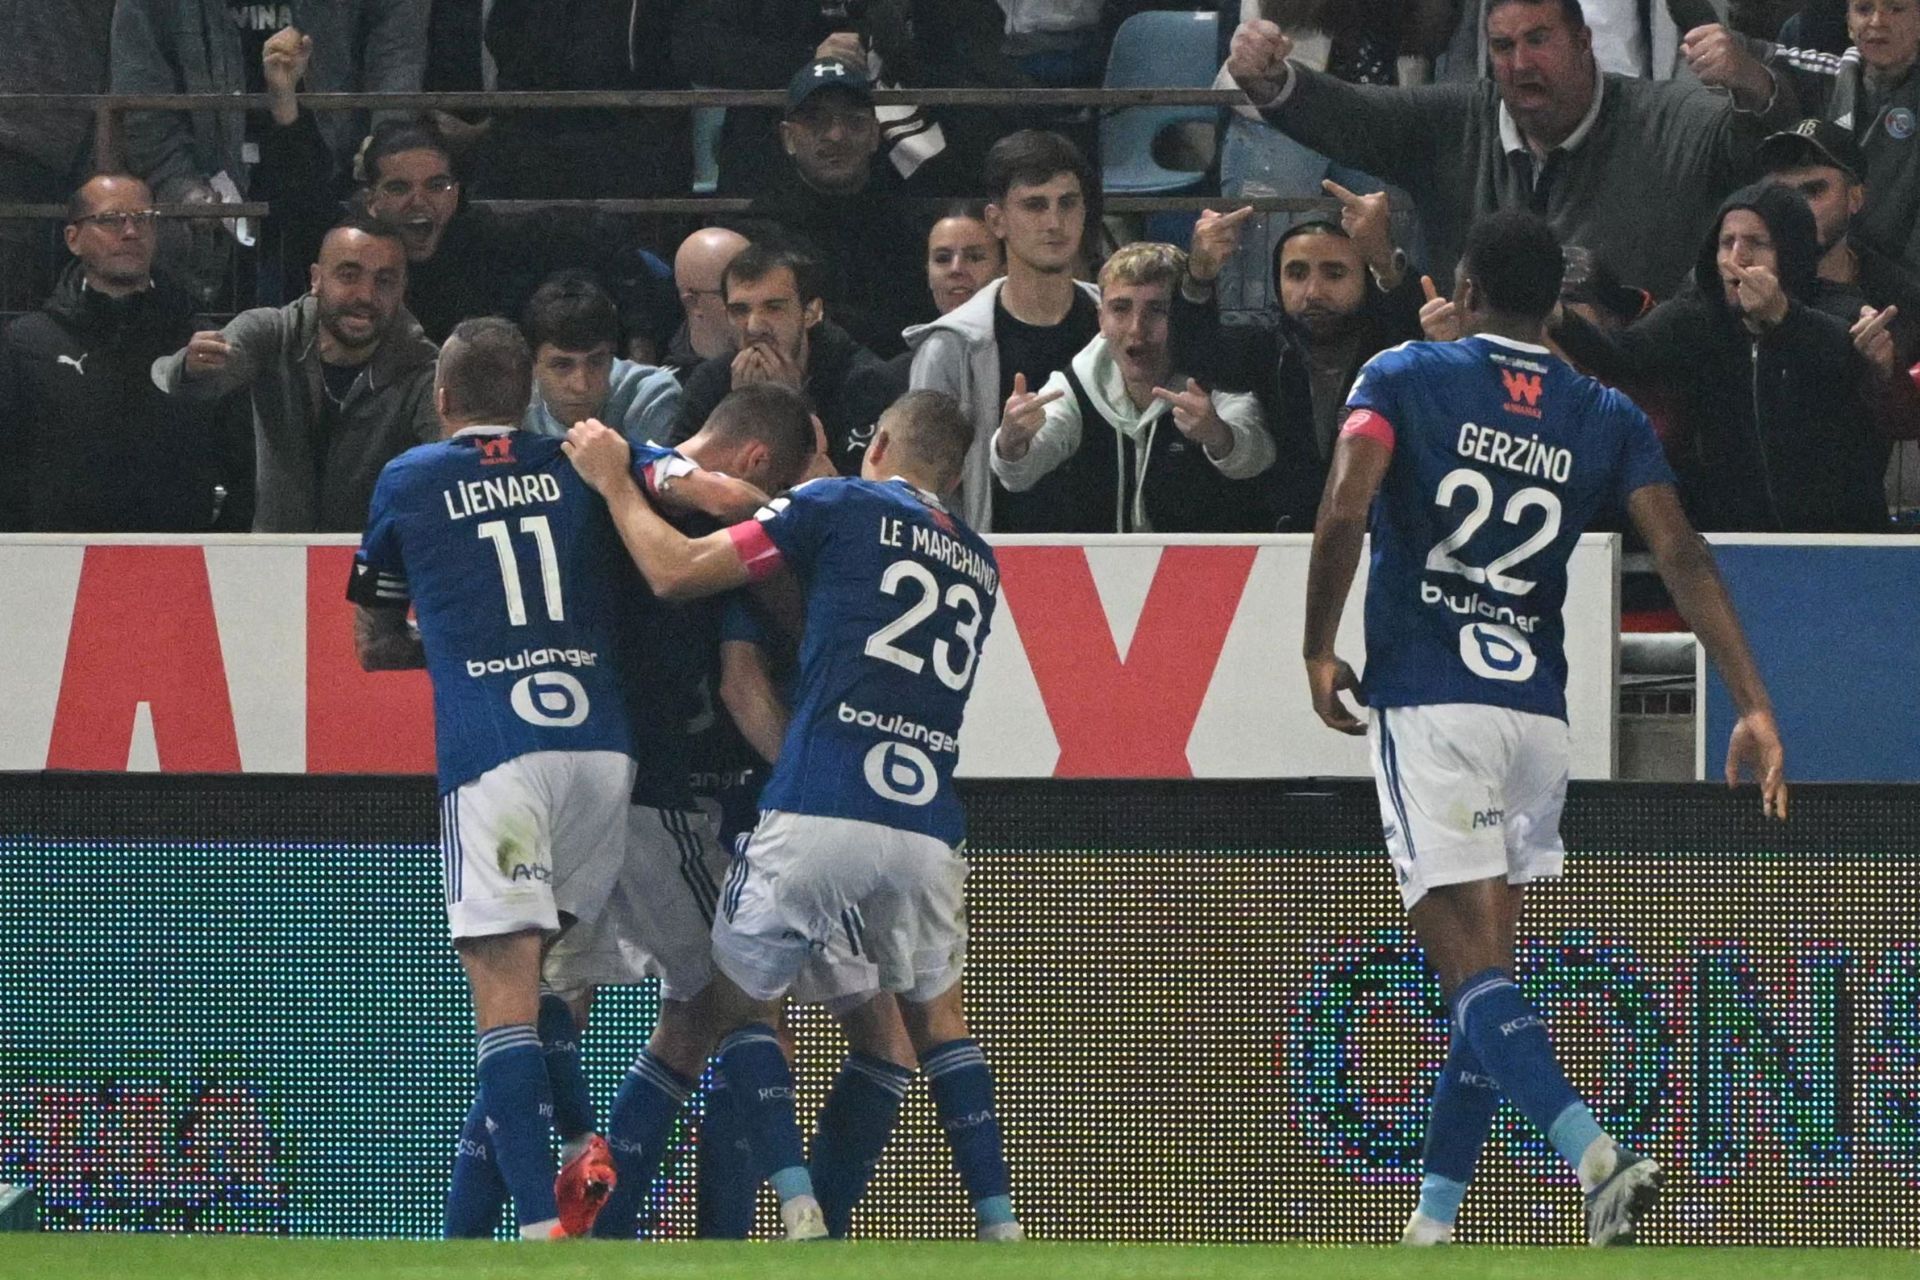 Strasbourg will host Lorient on Sunday - Ligue 1 